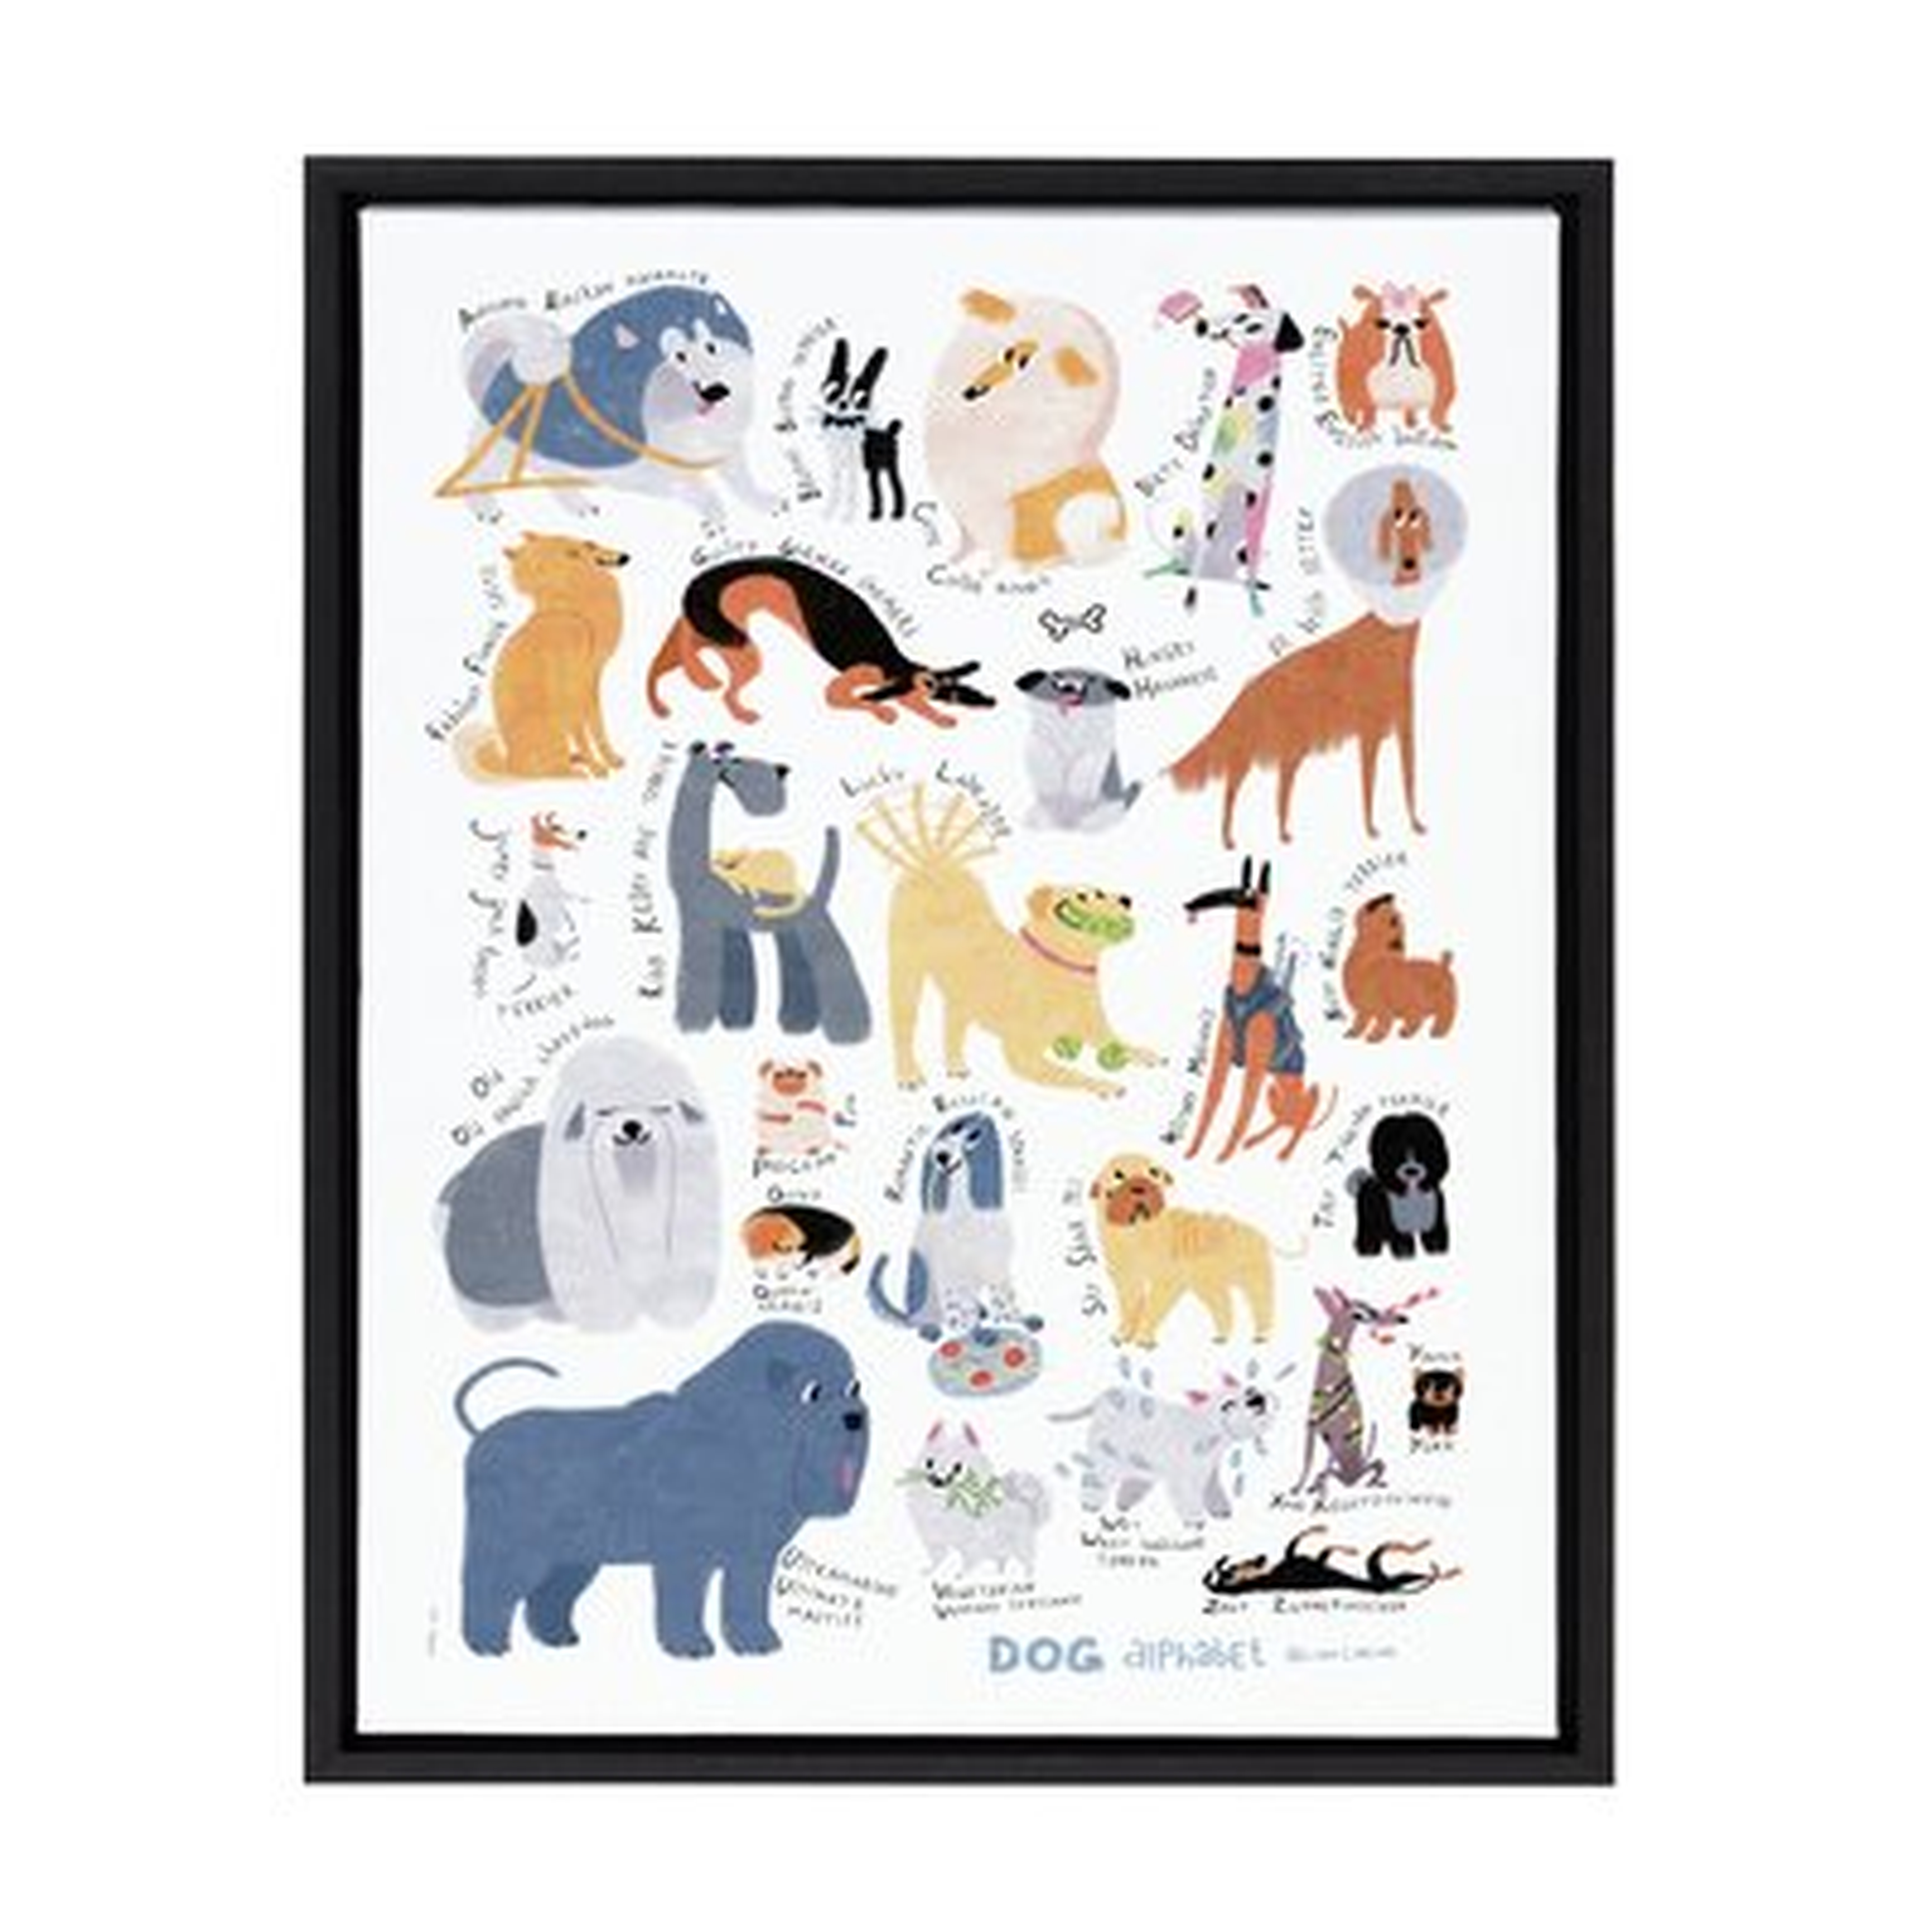 'Dog Alphabet' Framed Graphic Art Print on Canvas - Wayfair